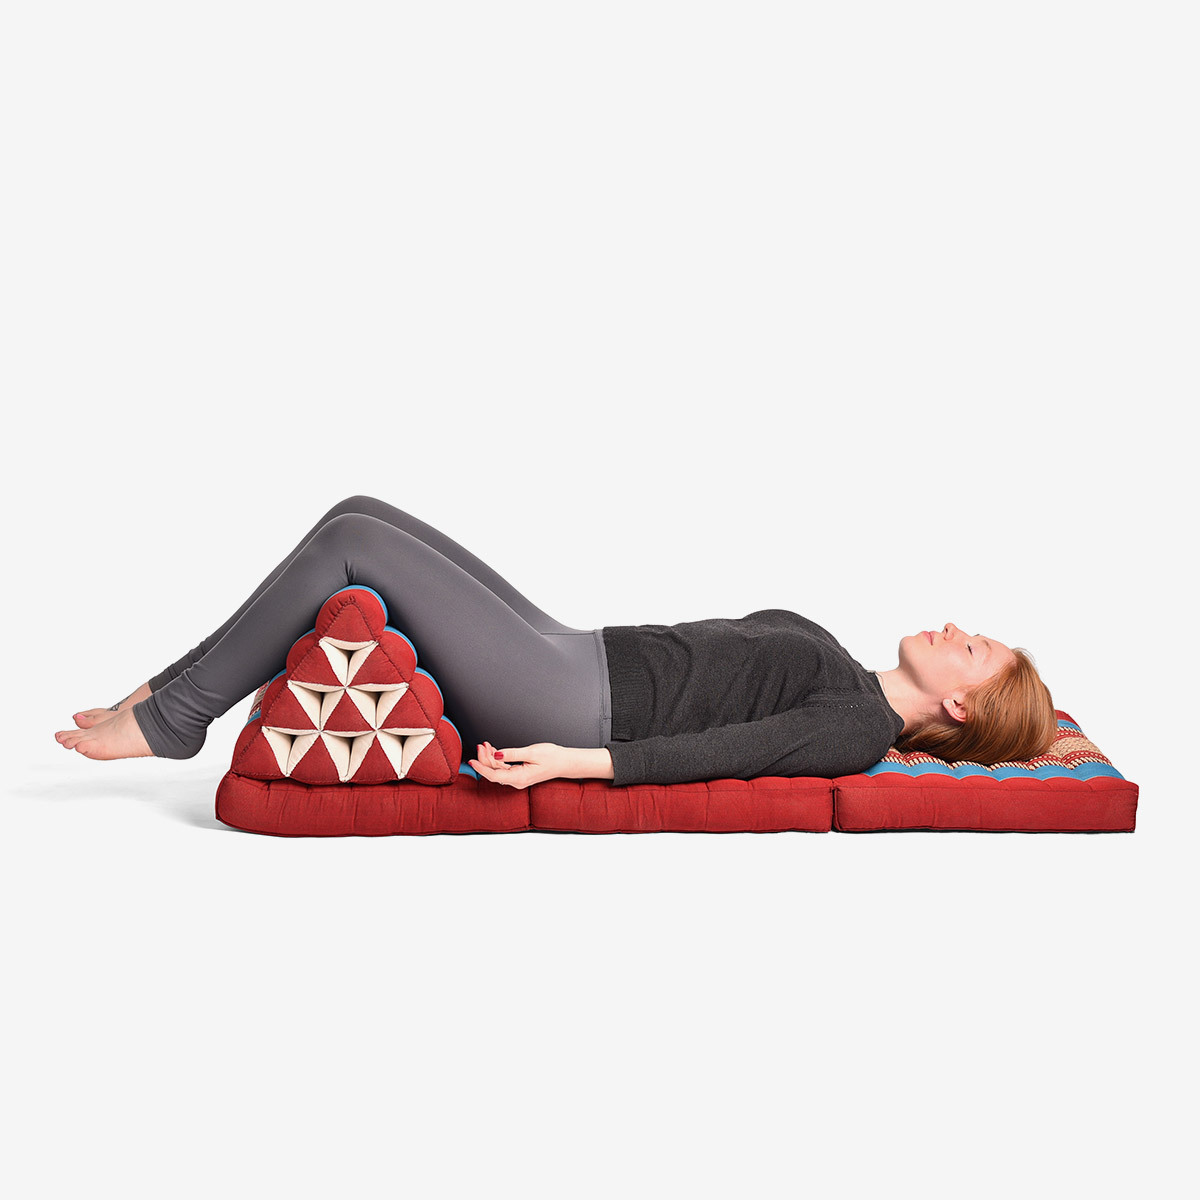 3 Fold Meditation Mat double - meditation yoga decor bed cushion pillow